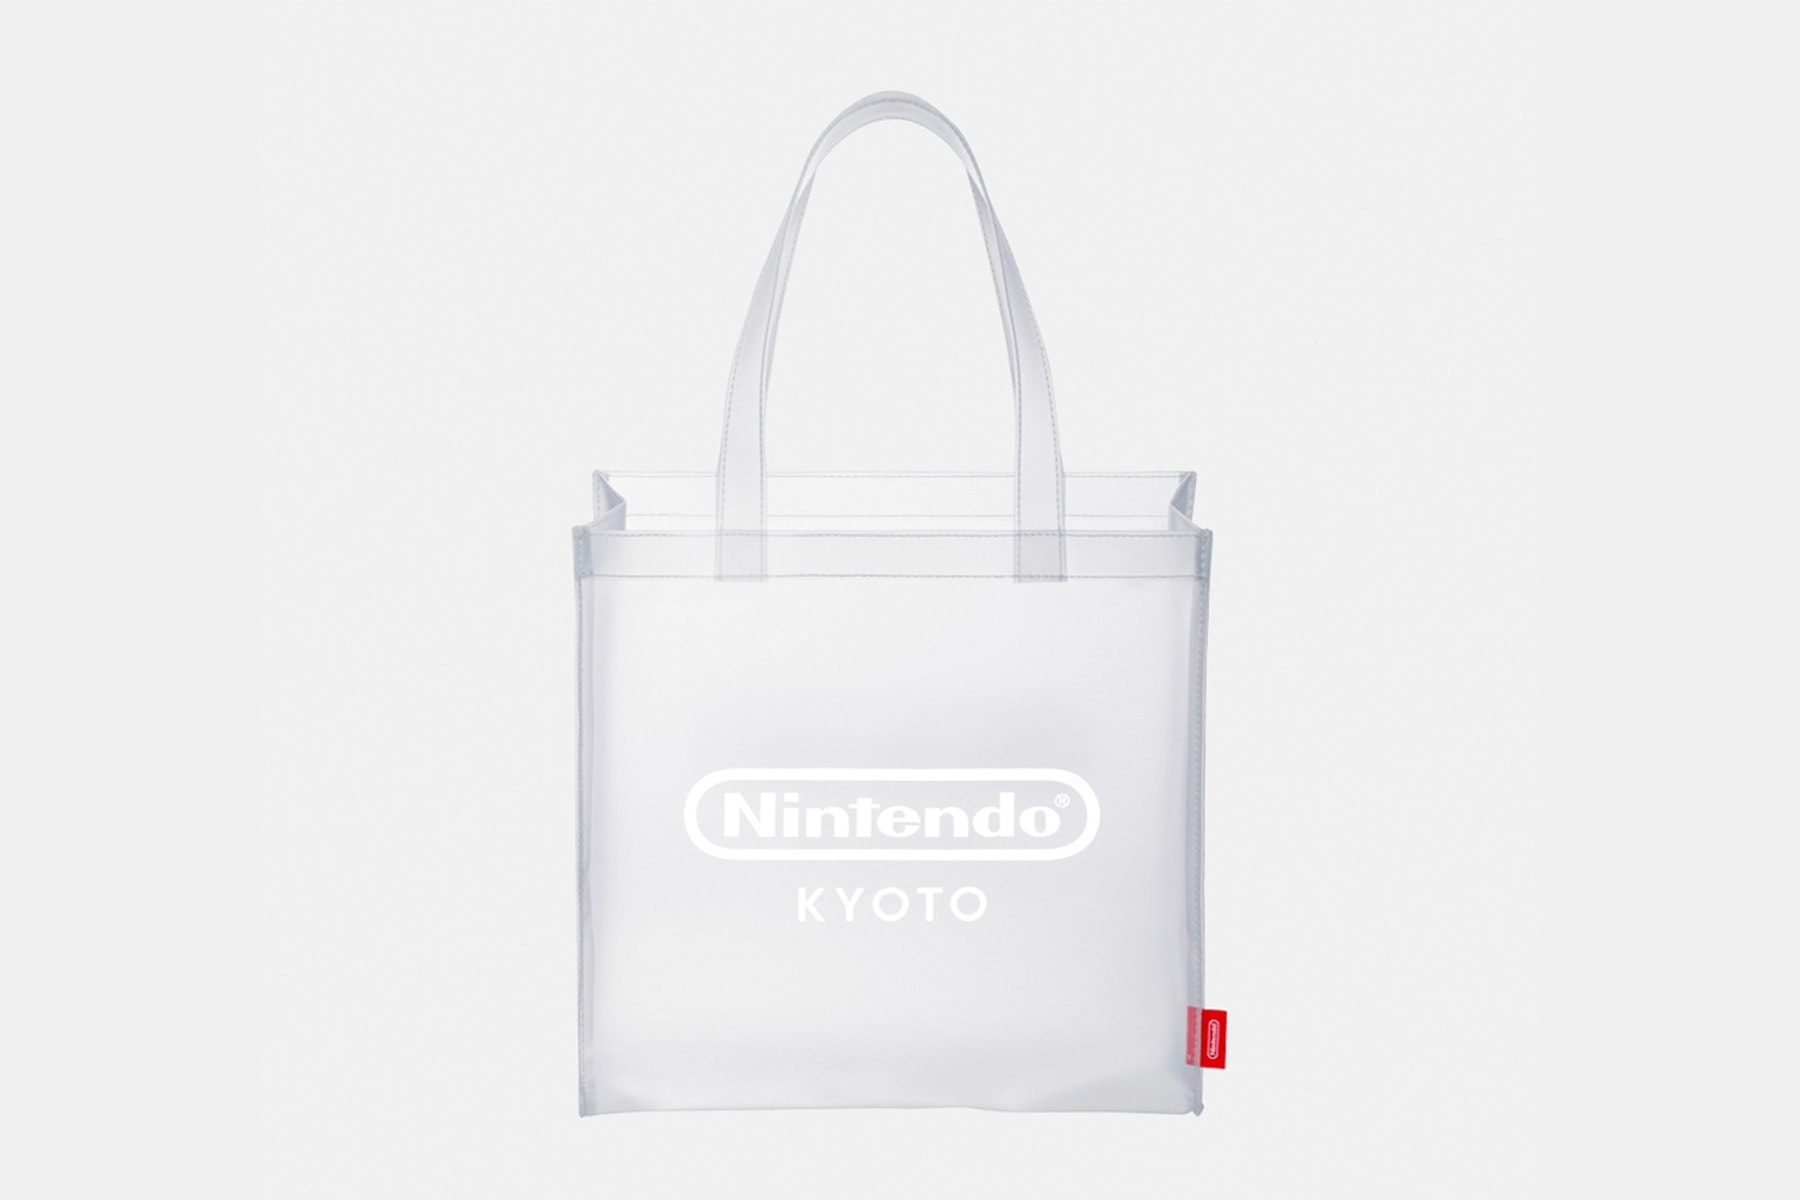 Nintendo 全新透明 Tote Bag 正式展開發售